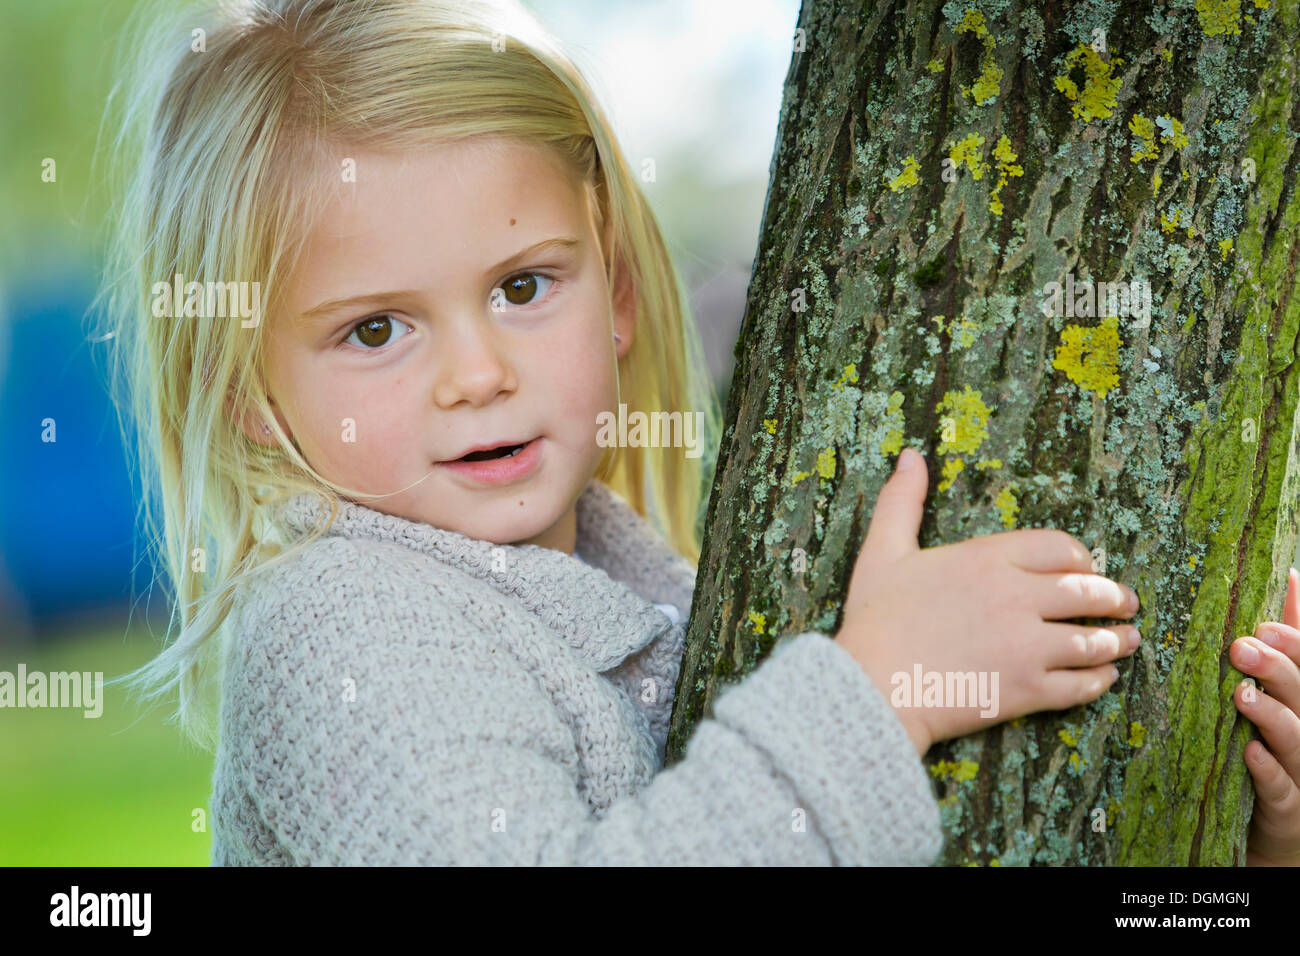 Girl, 4 years old, portrait Stock Photo